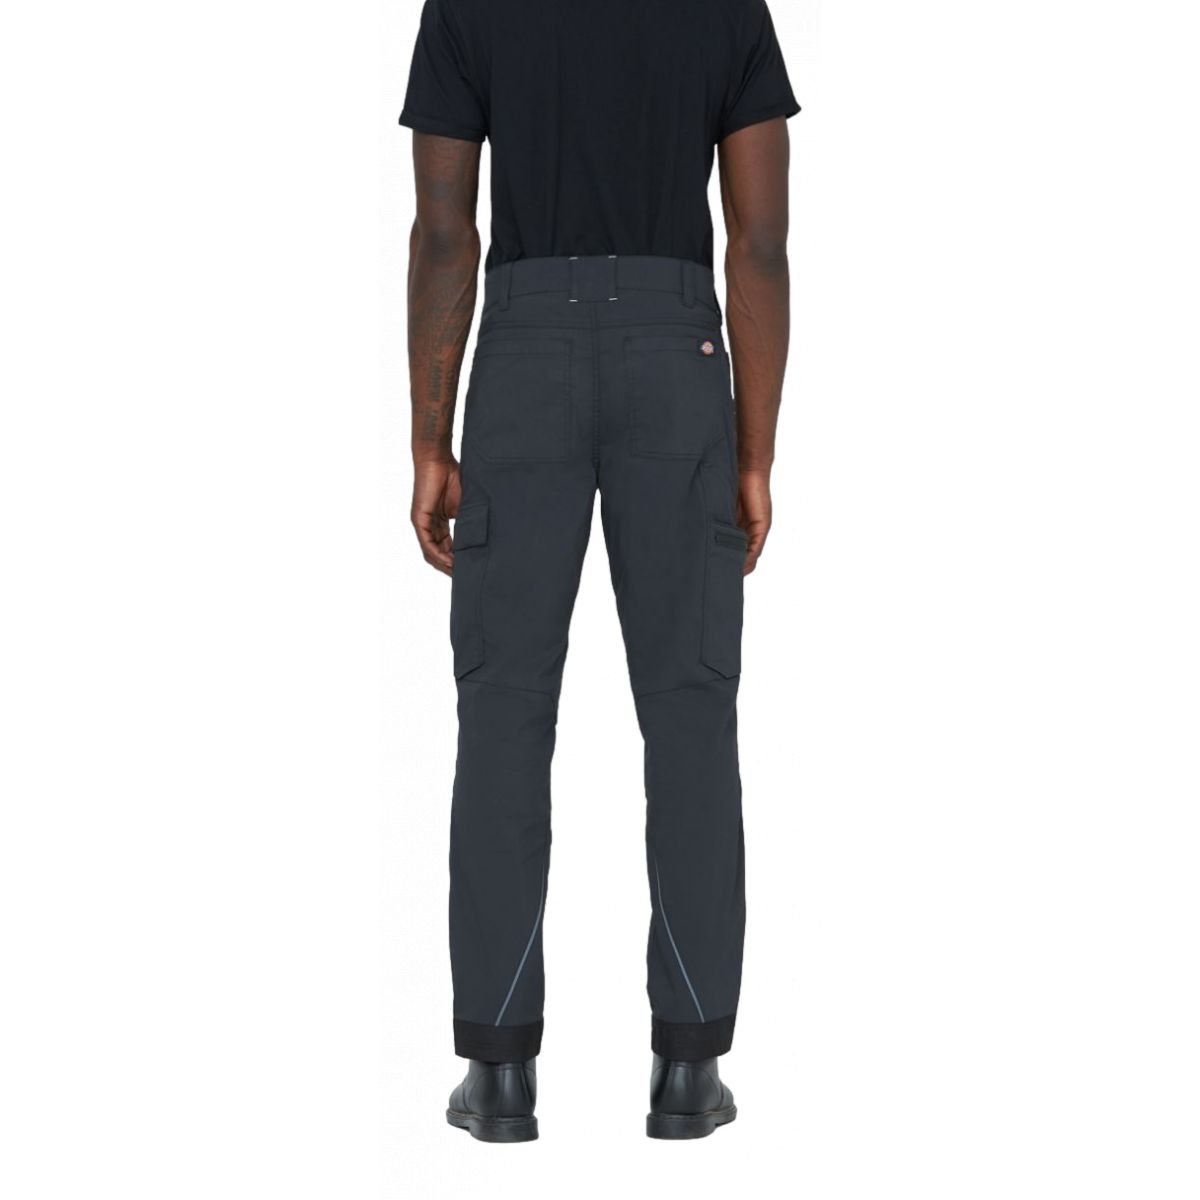 Pantalon léger Flex Noir - Dickies - Taille 40 3